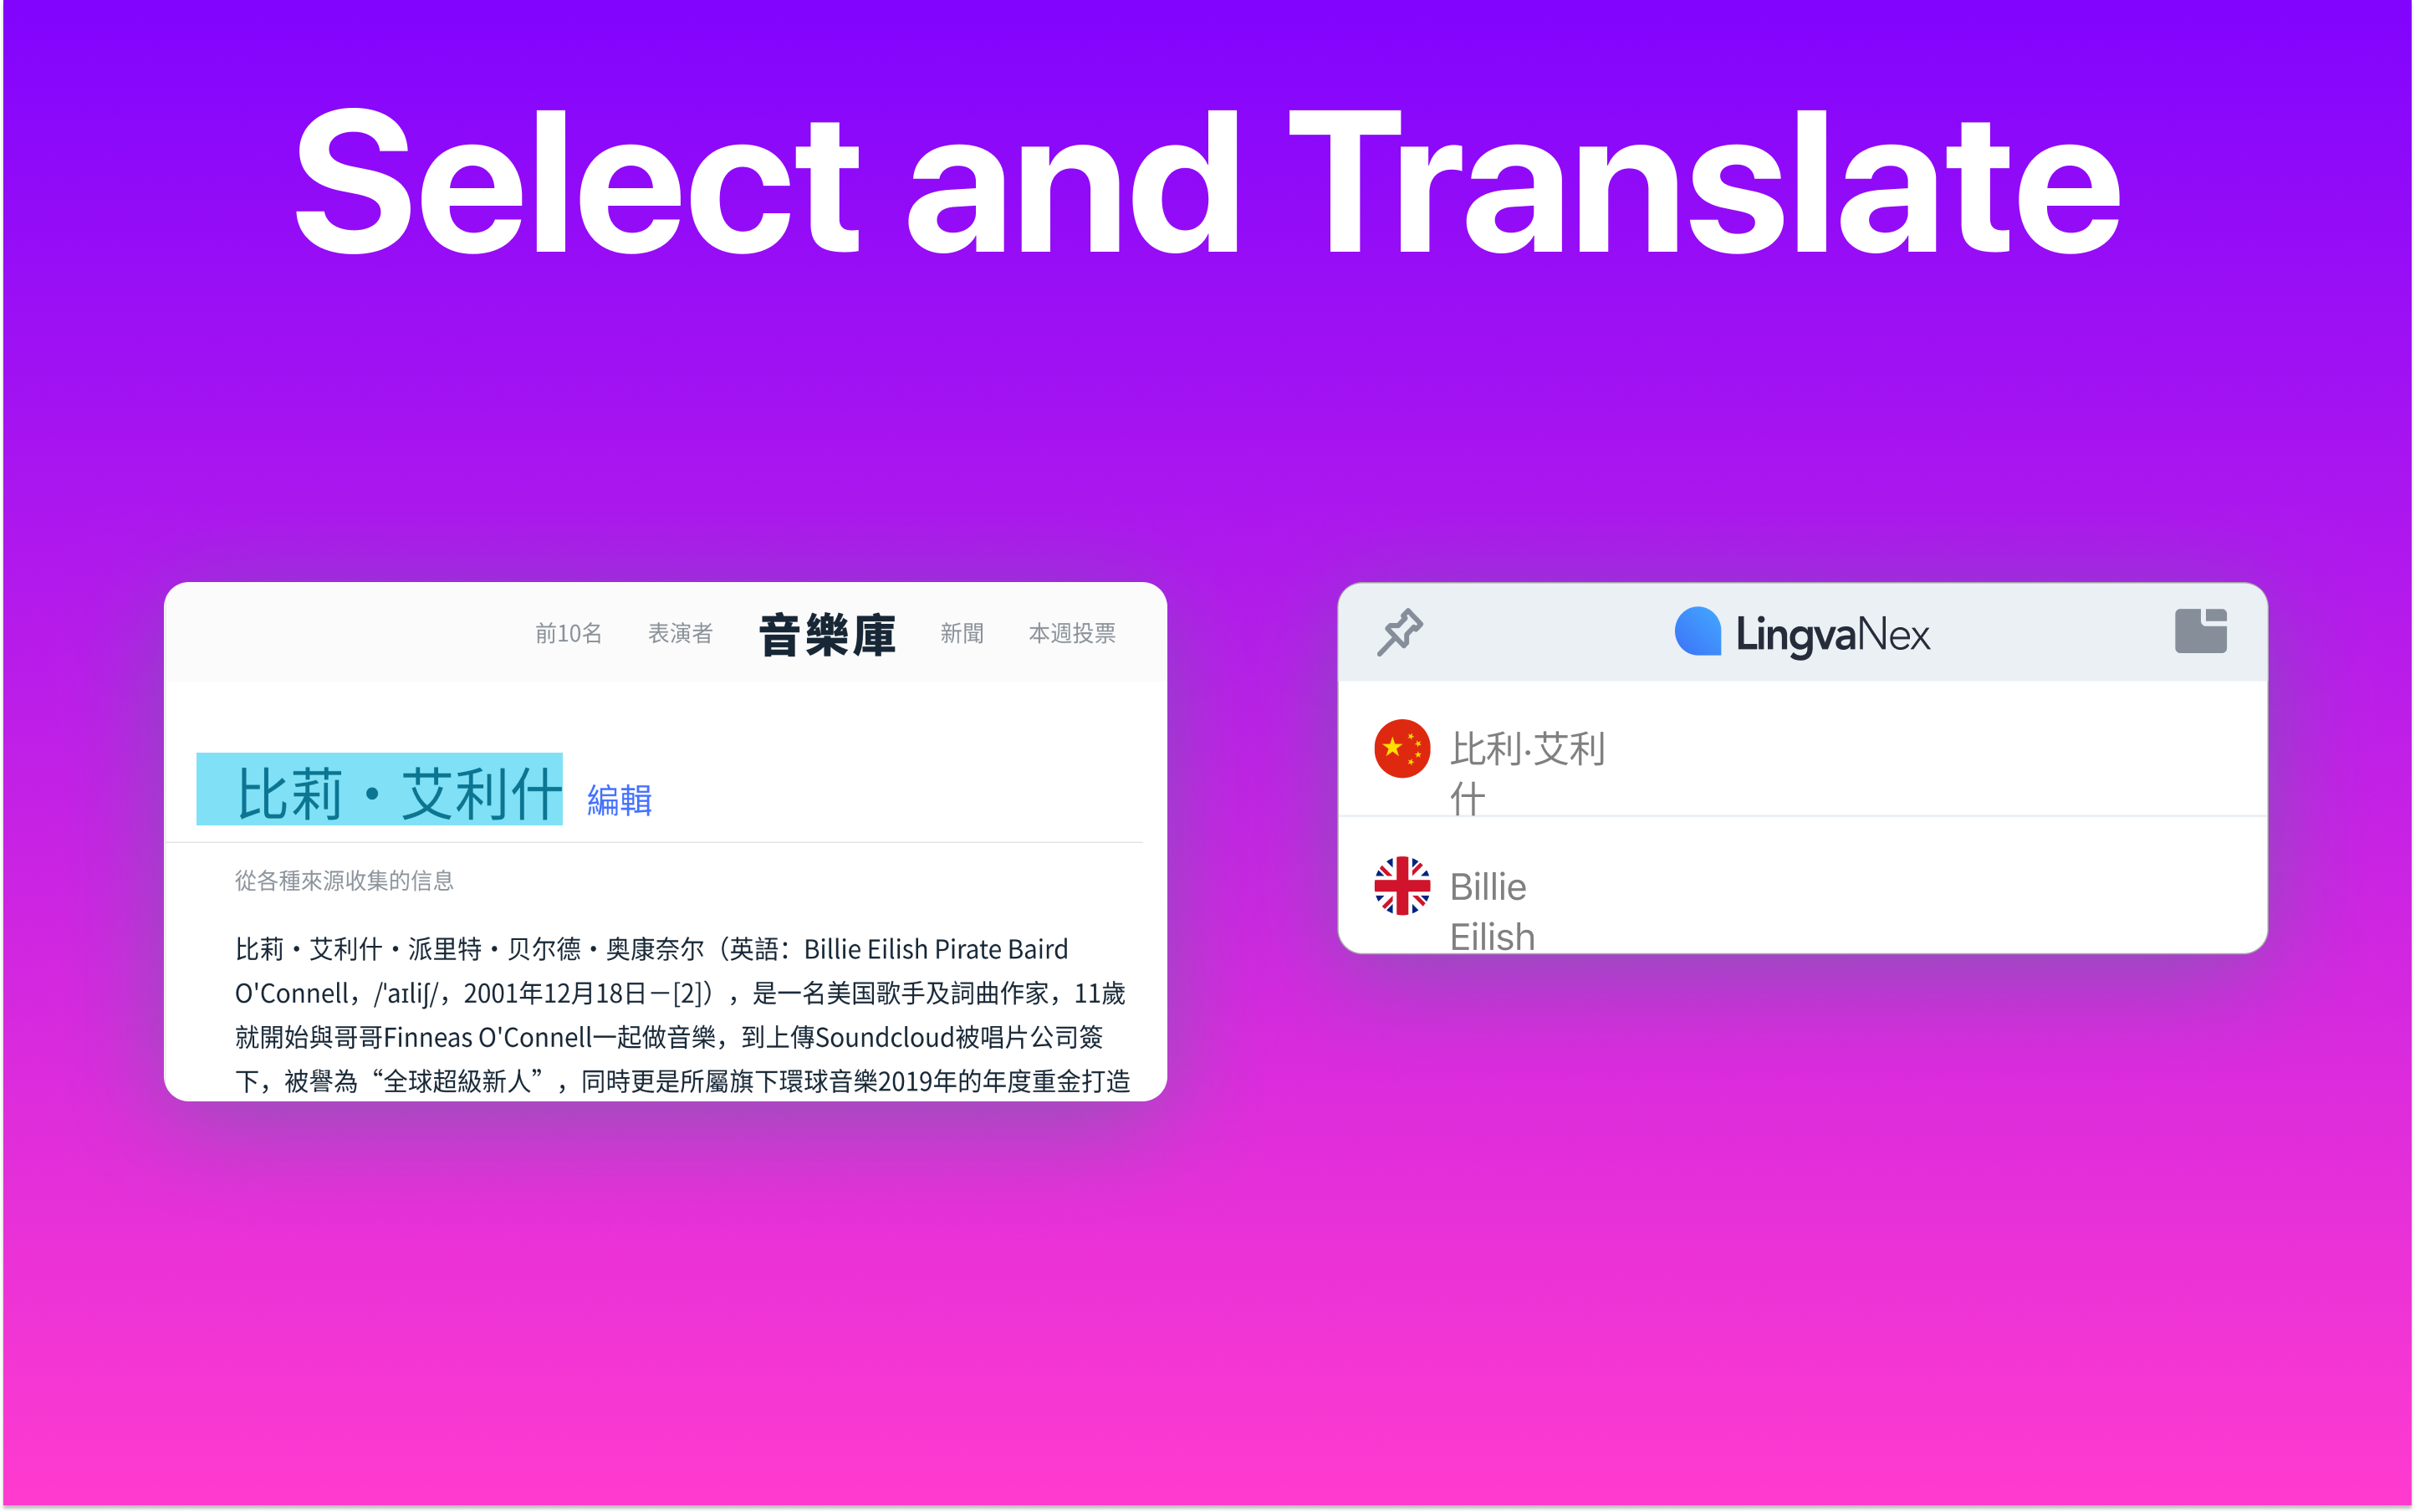 Lingvanex Translator 1.5 : Select and translate